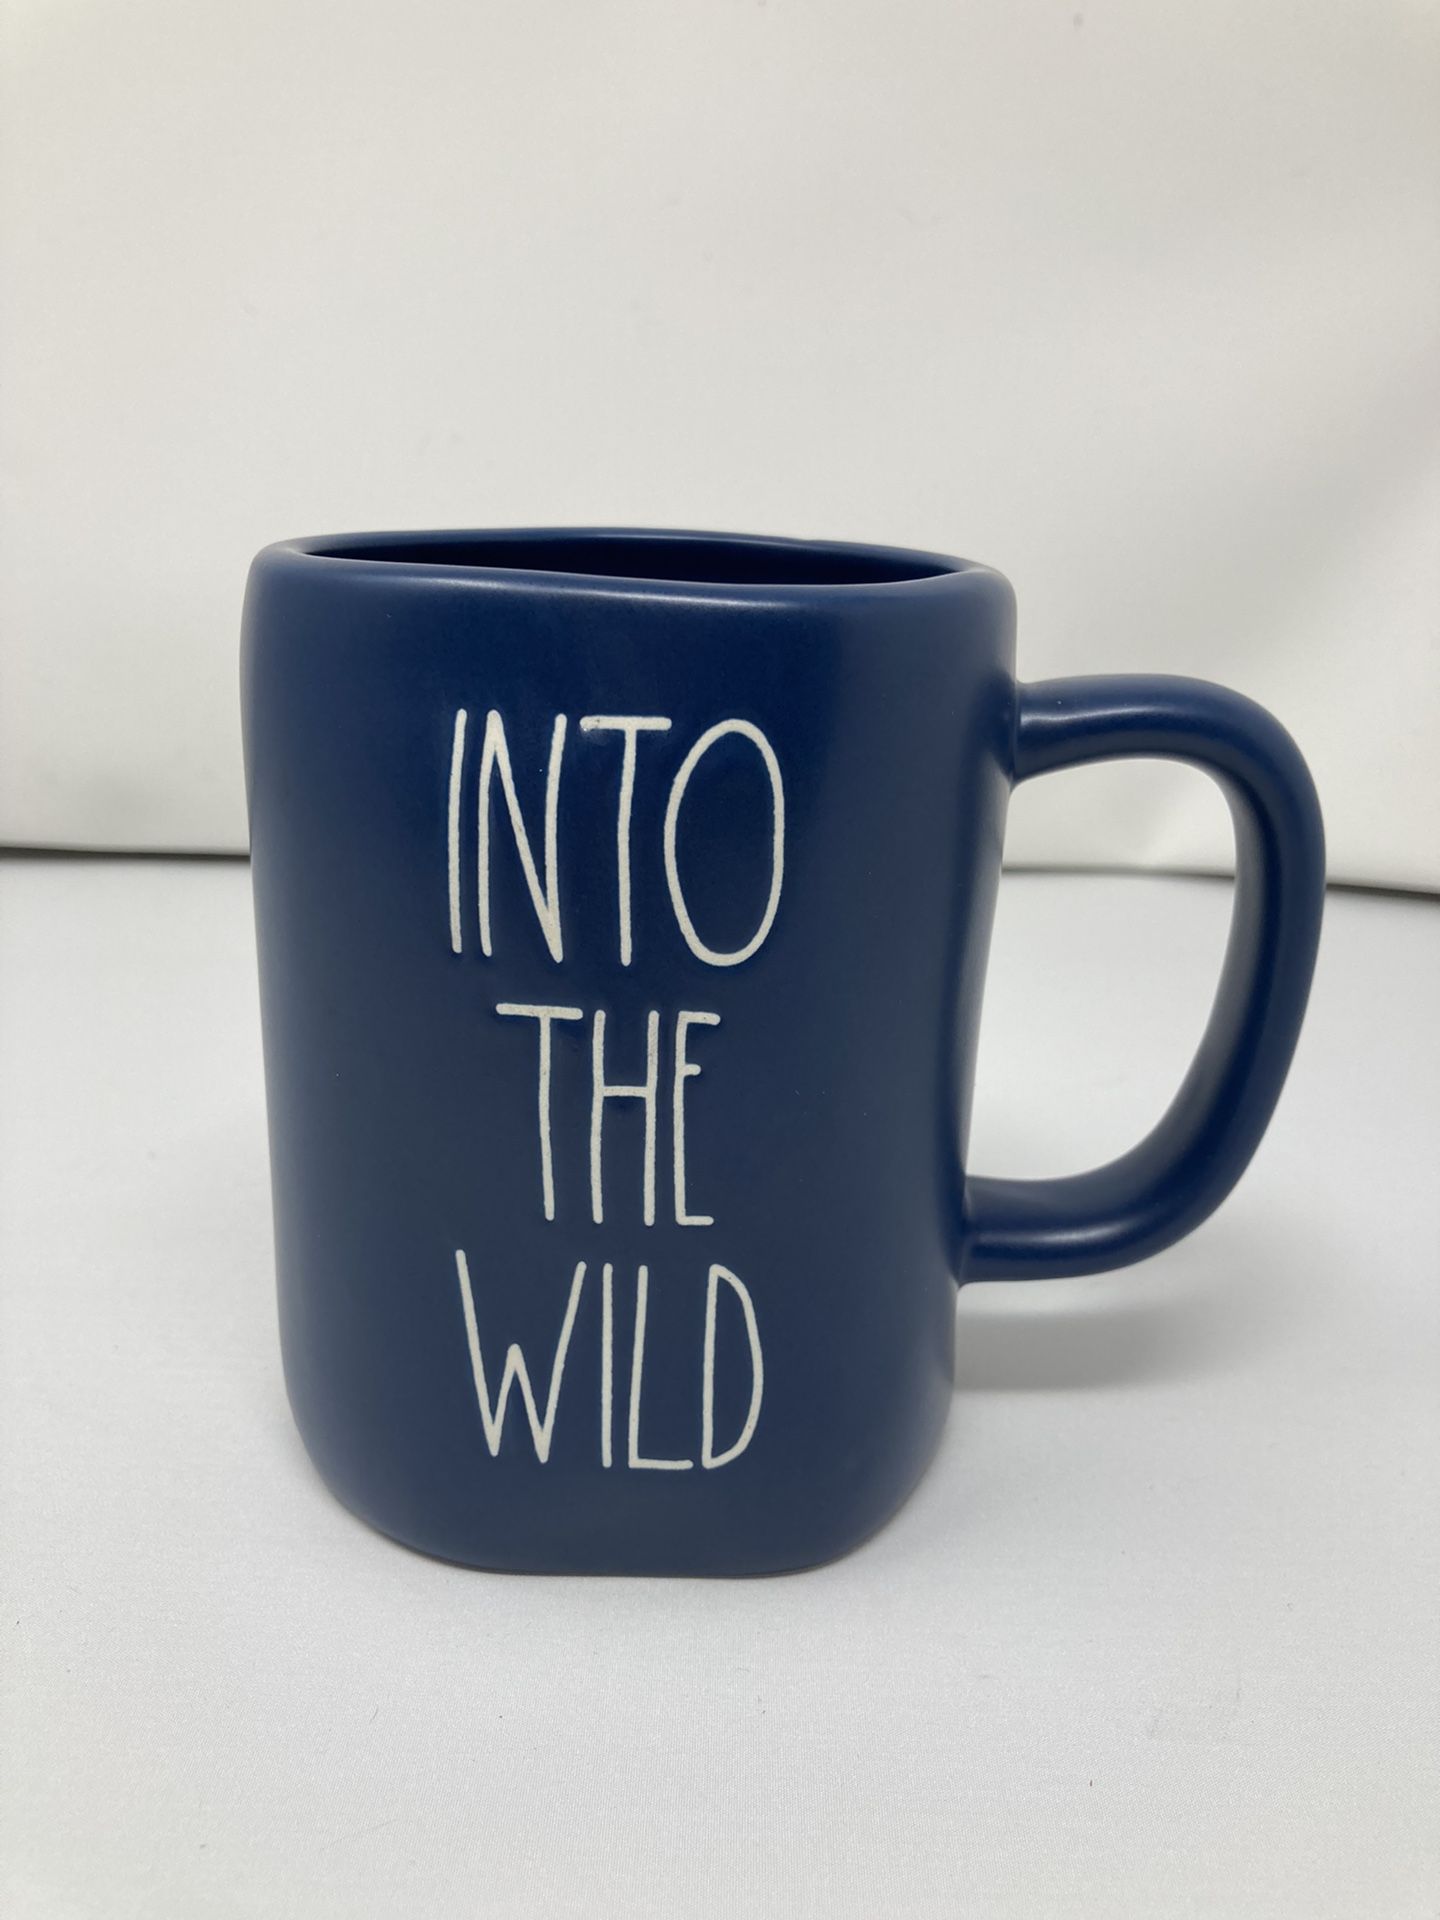 Rae Dunn “Into The Wild” Blue Mug 